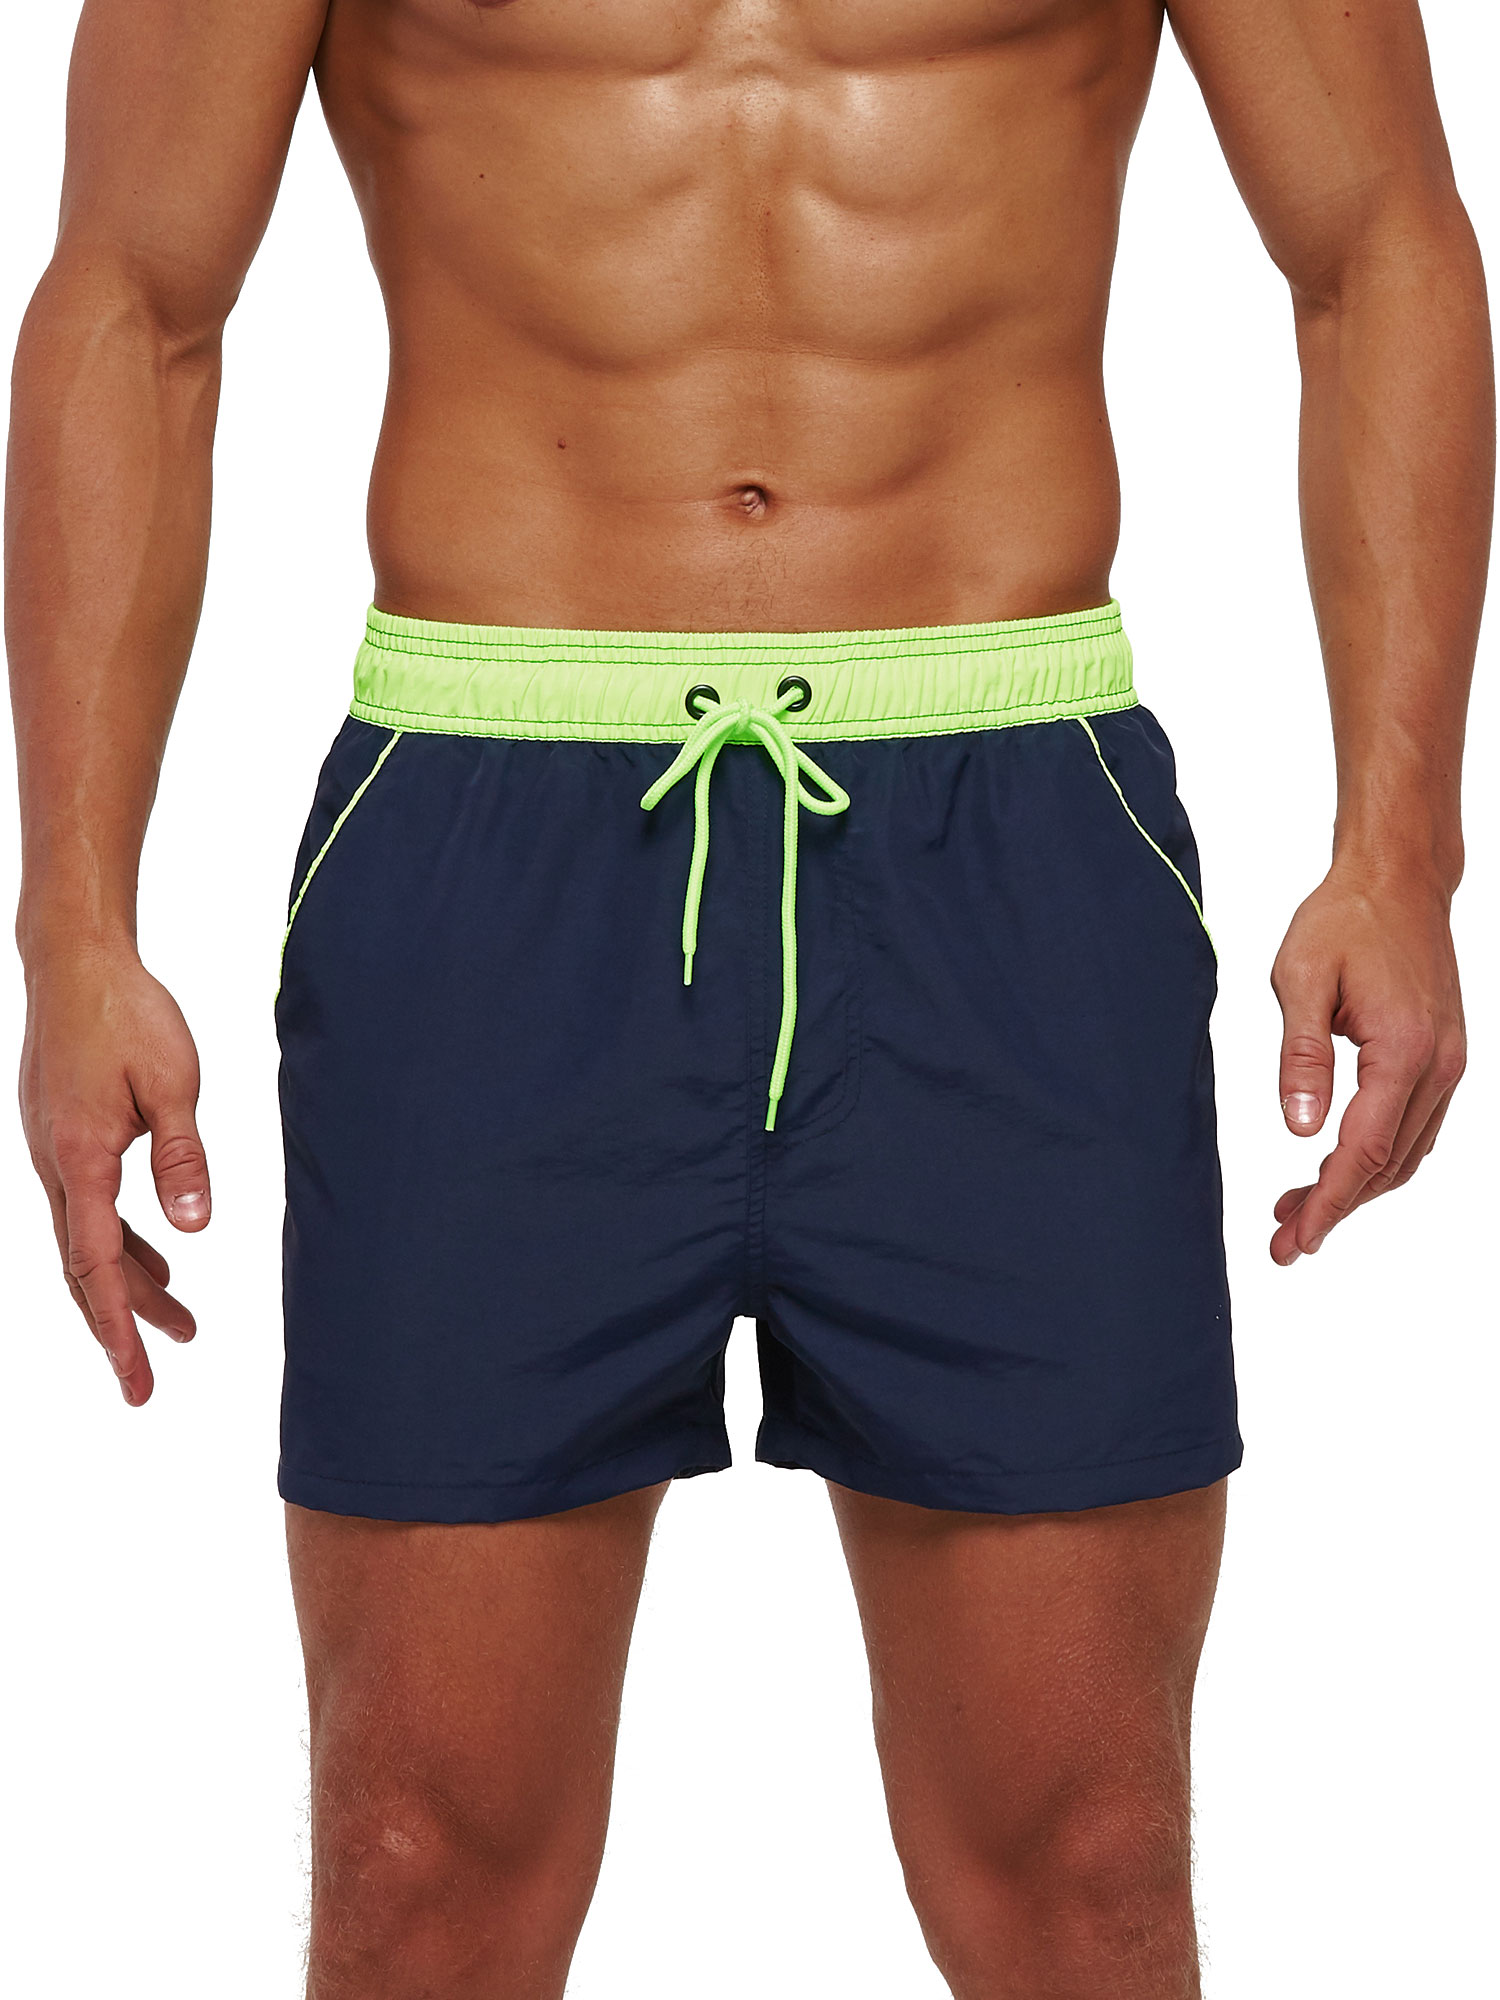 Zentrex Mens Swim Trunks Beach Shorts 9 Inches Quick Dry Beach Swimwear with Zipper Pockets